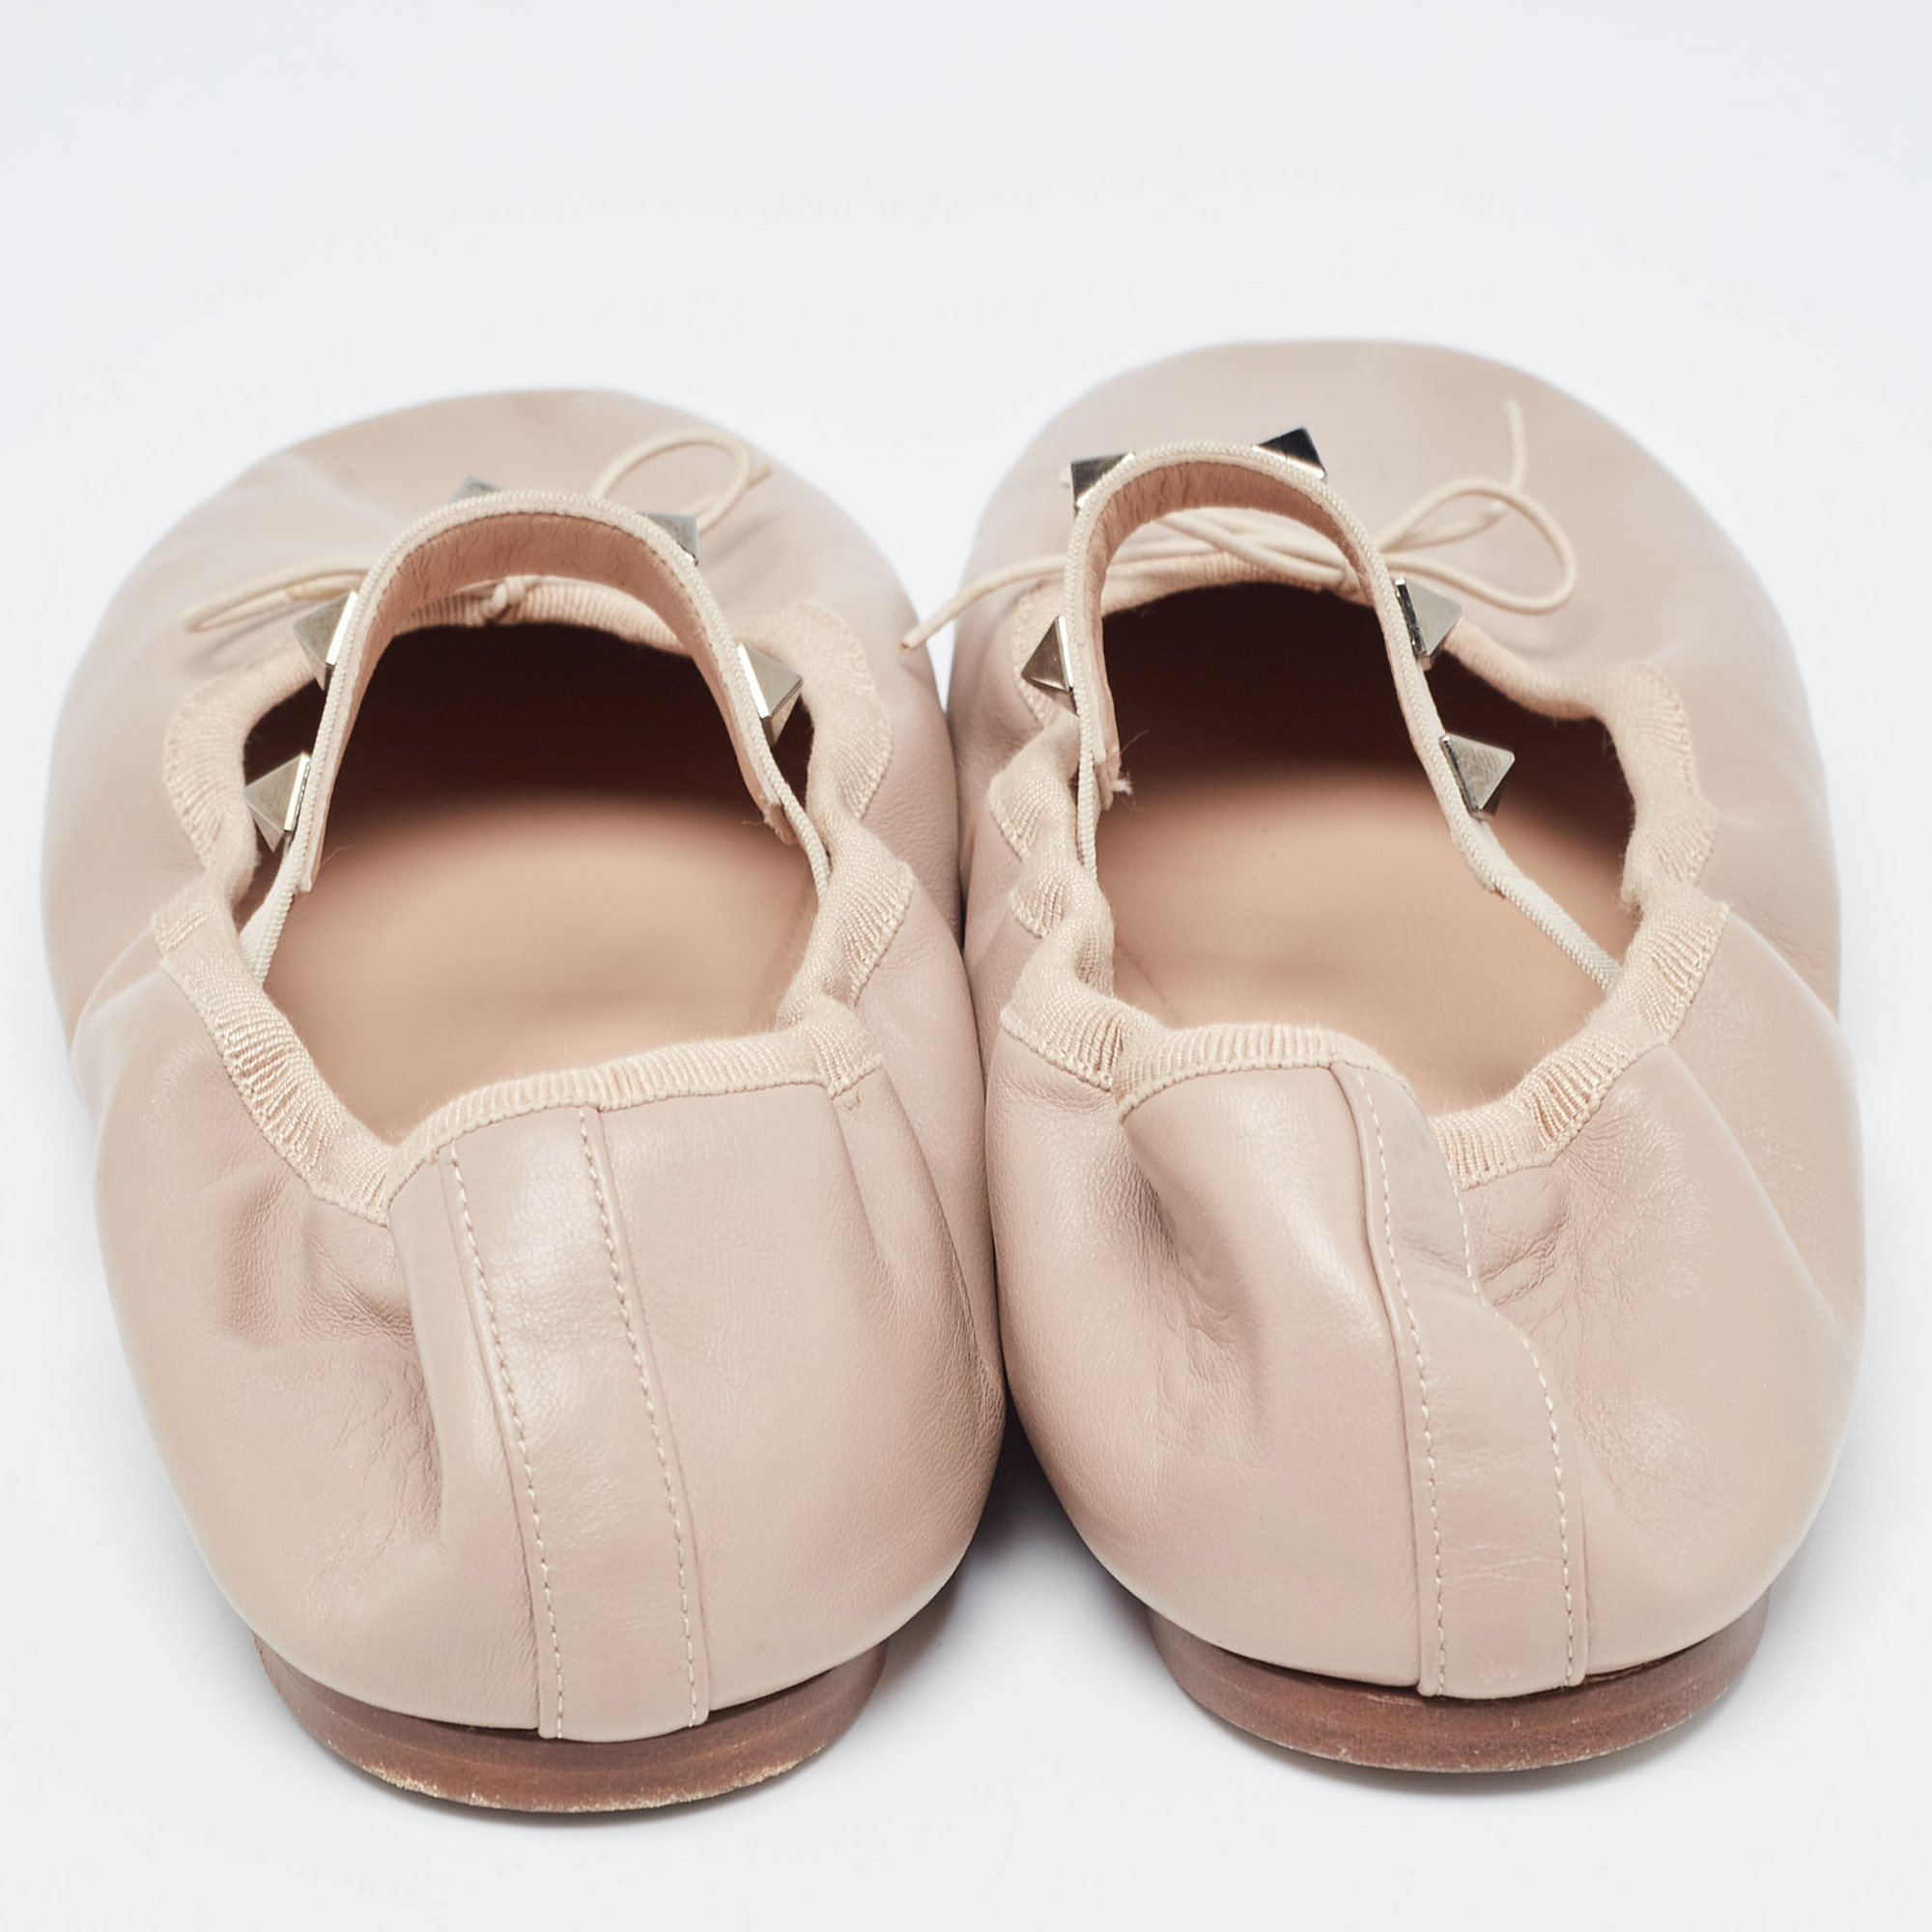 Valentino Beige Leather Rockstud Ballet Flats Size 39